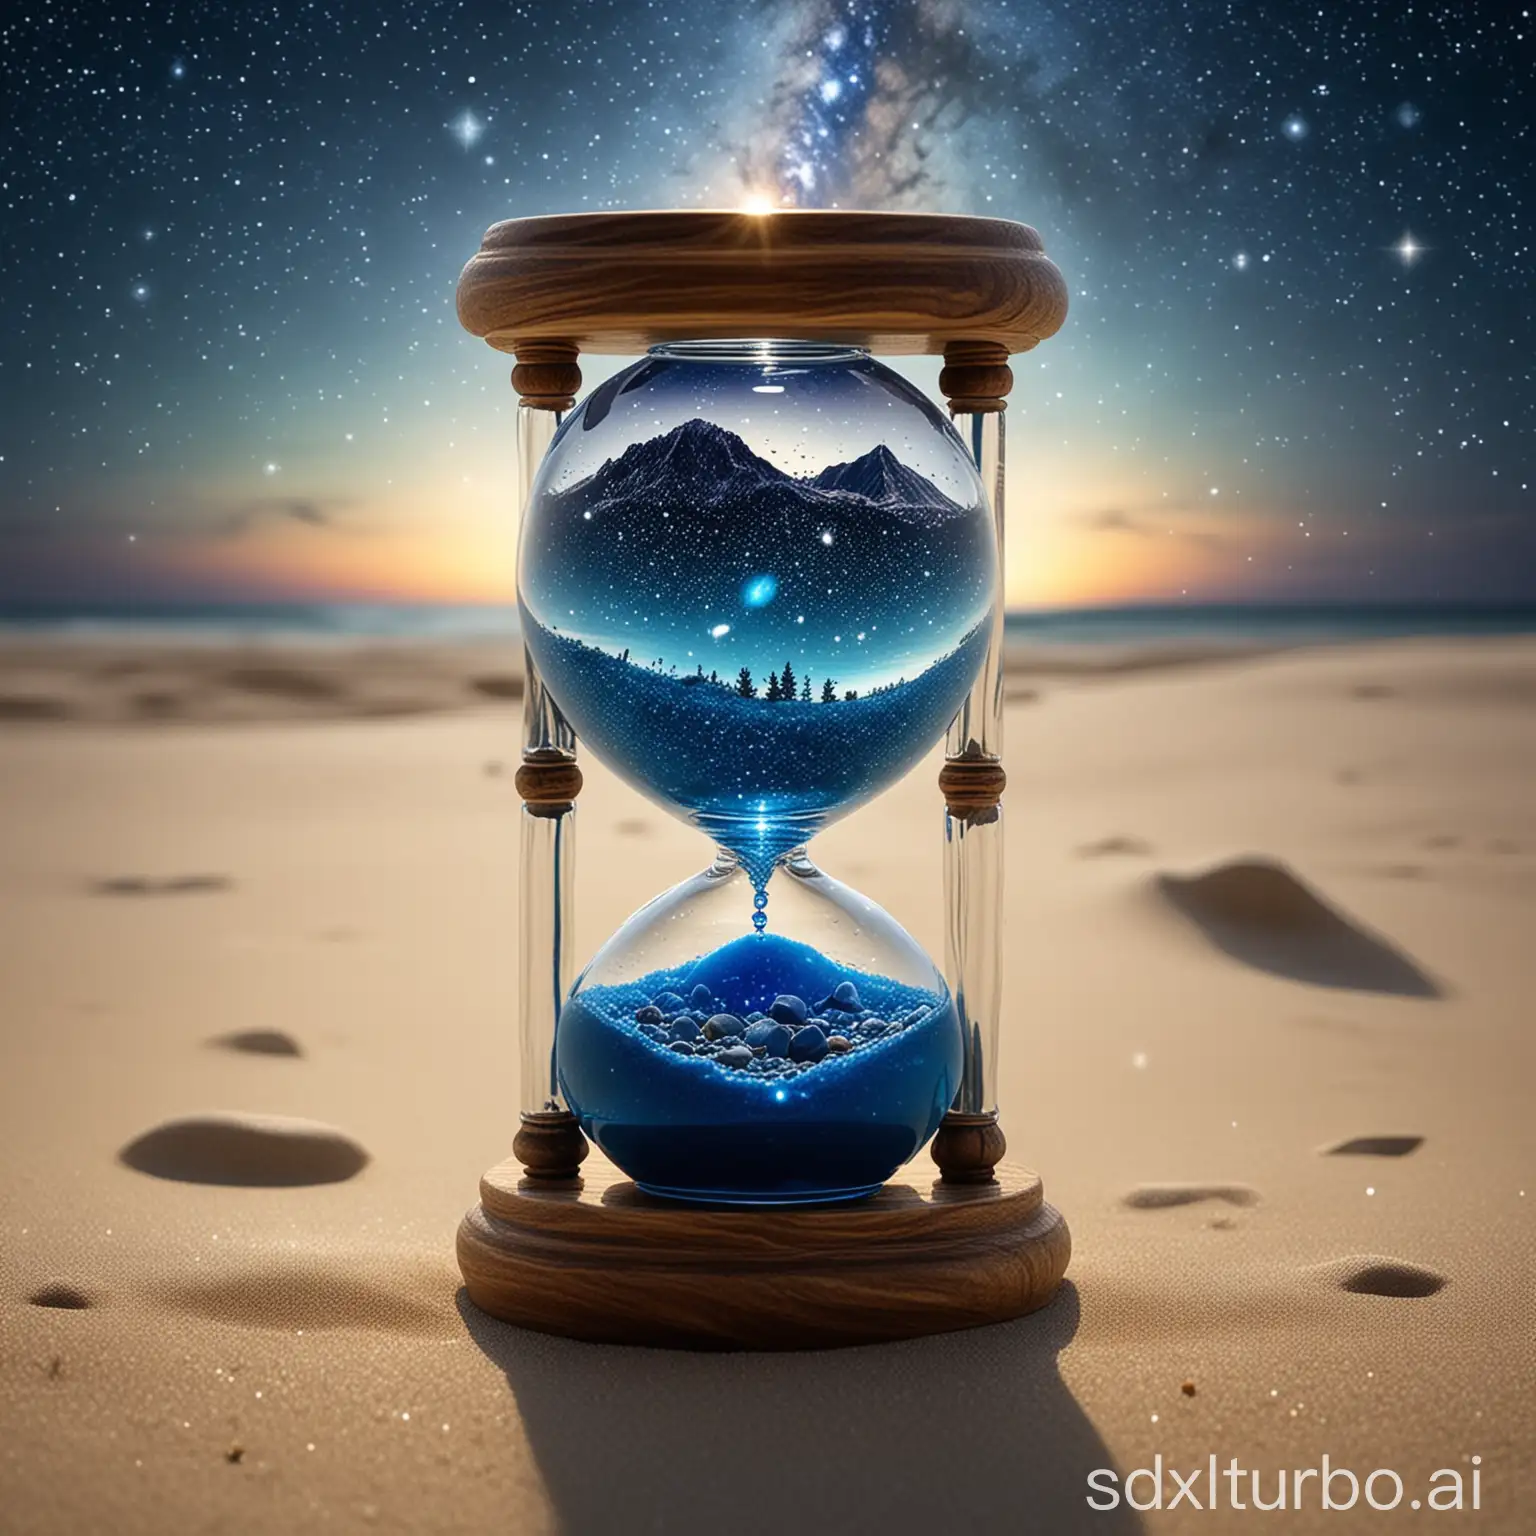 Translucent-Glass-Sandglass-with-Celestial-Blue-Stardust-Contents